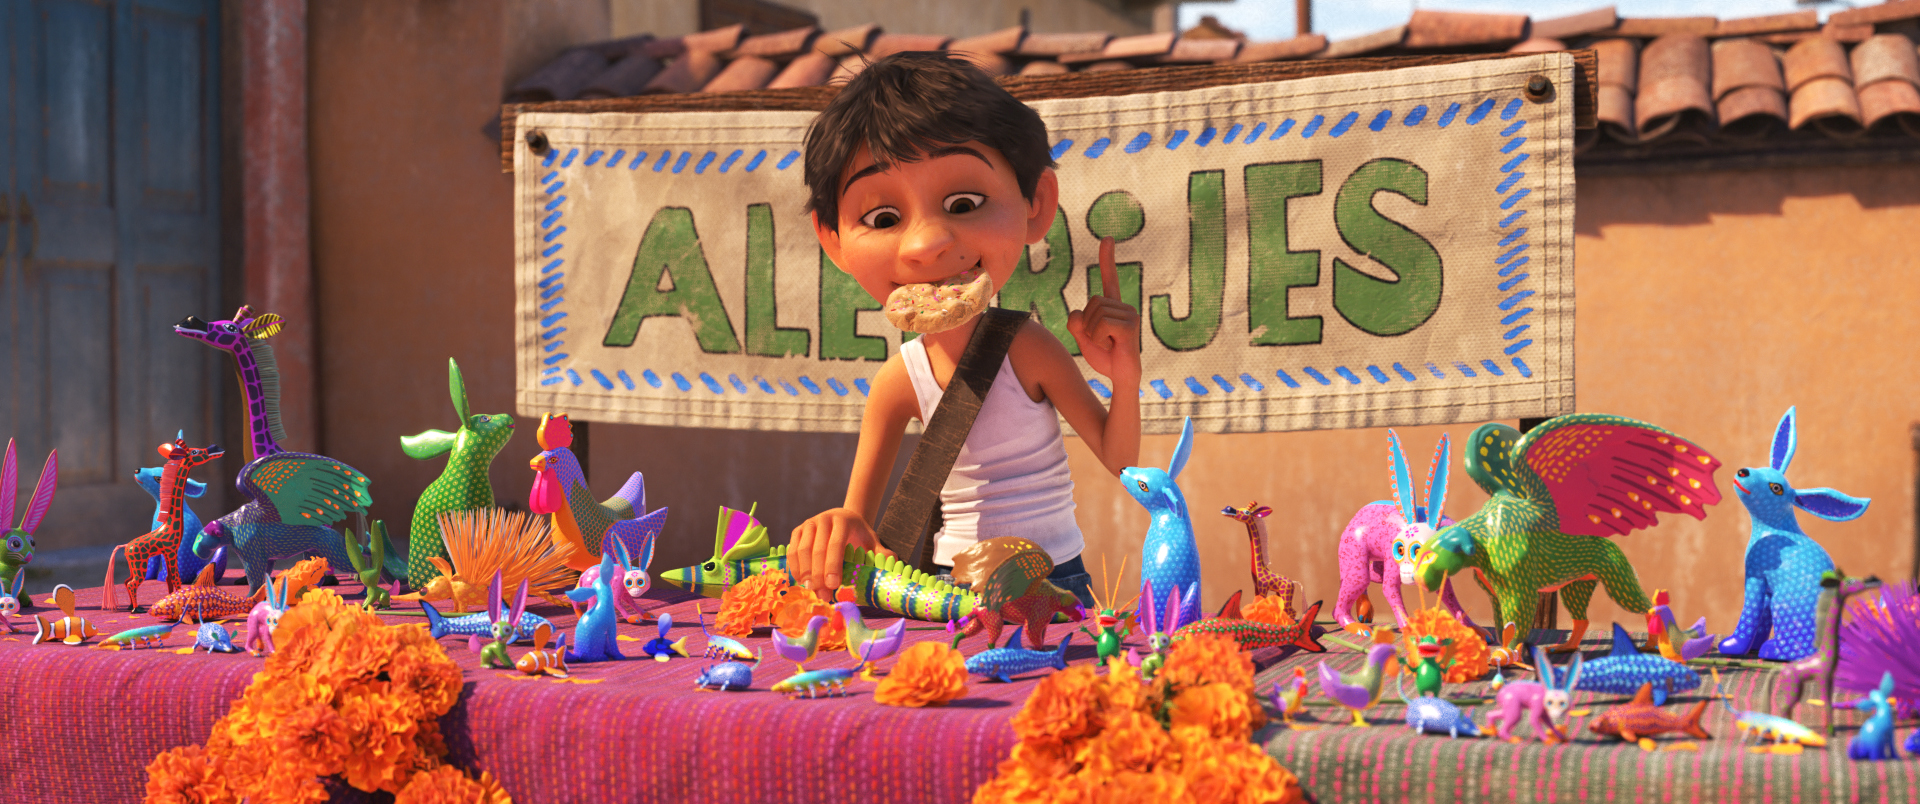 This Alebrije Workshop in Oaxaca Inspired Pixar's 'Coco'